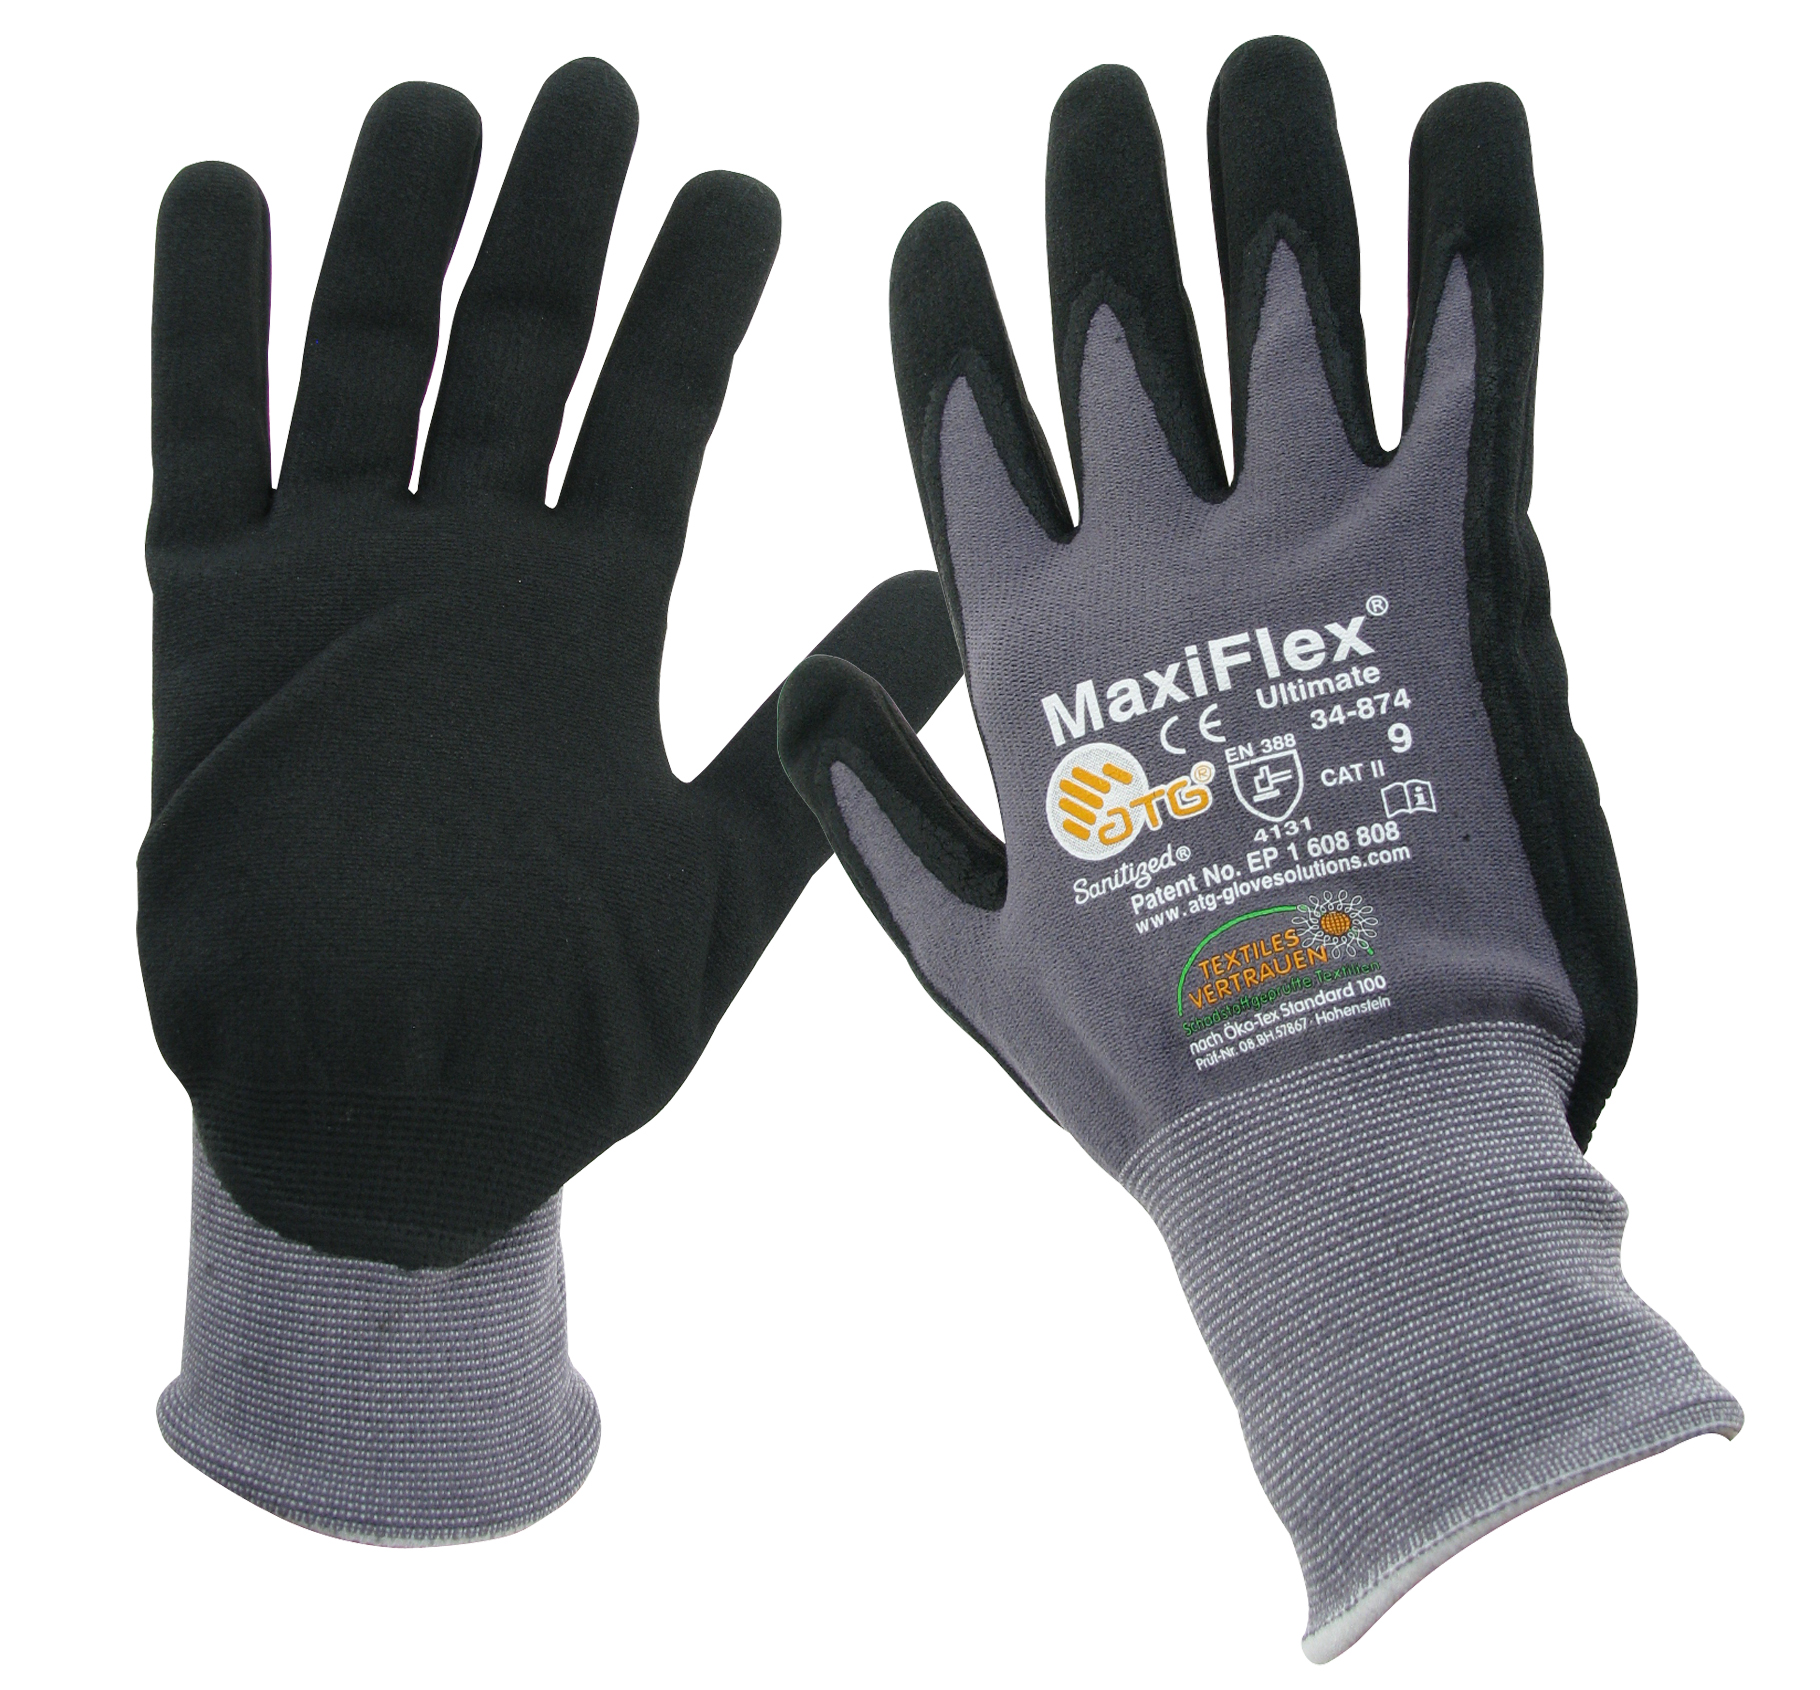 Gloves size 9, nitrile PU coated, black/grey